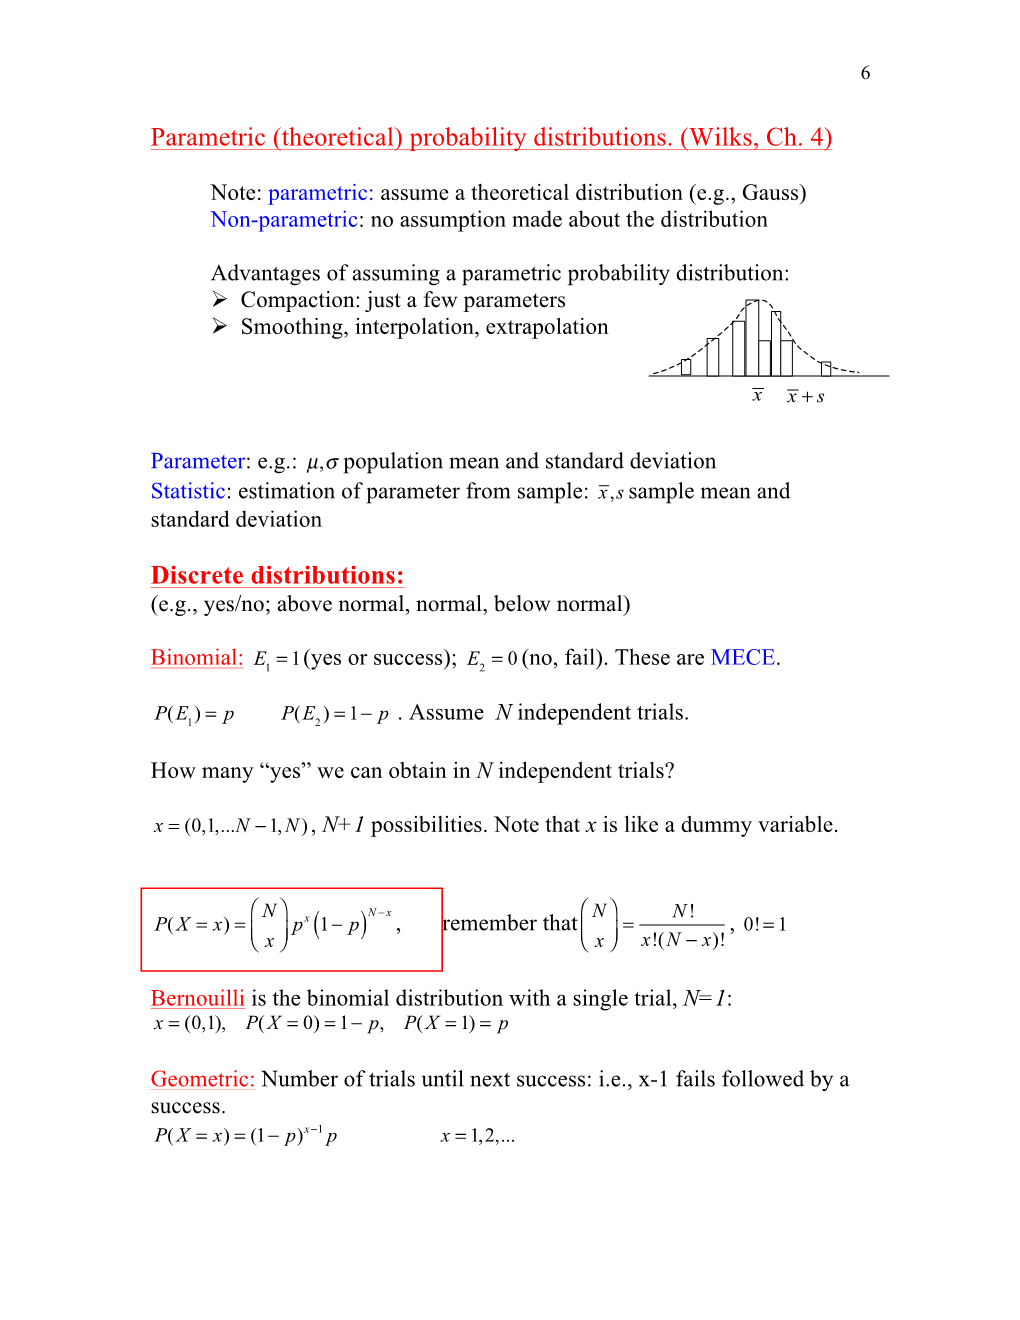 Parametric (Theoretical) Probability Distributions. (Wilks, Ch. 4) Discrete